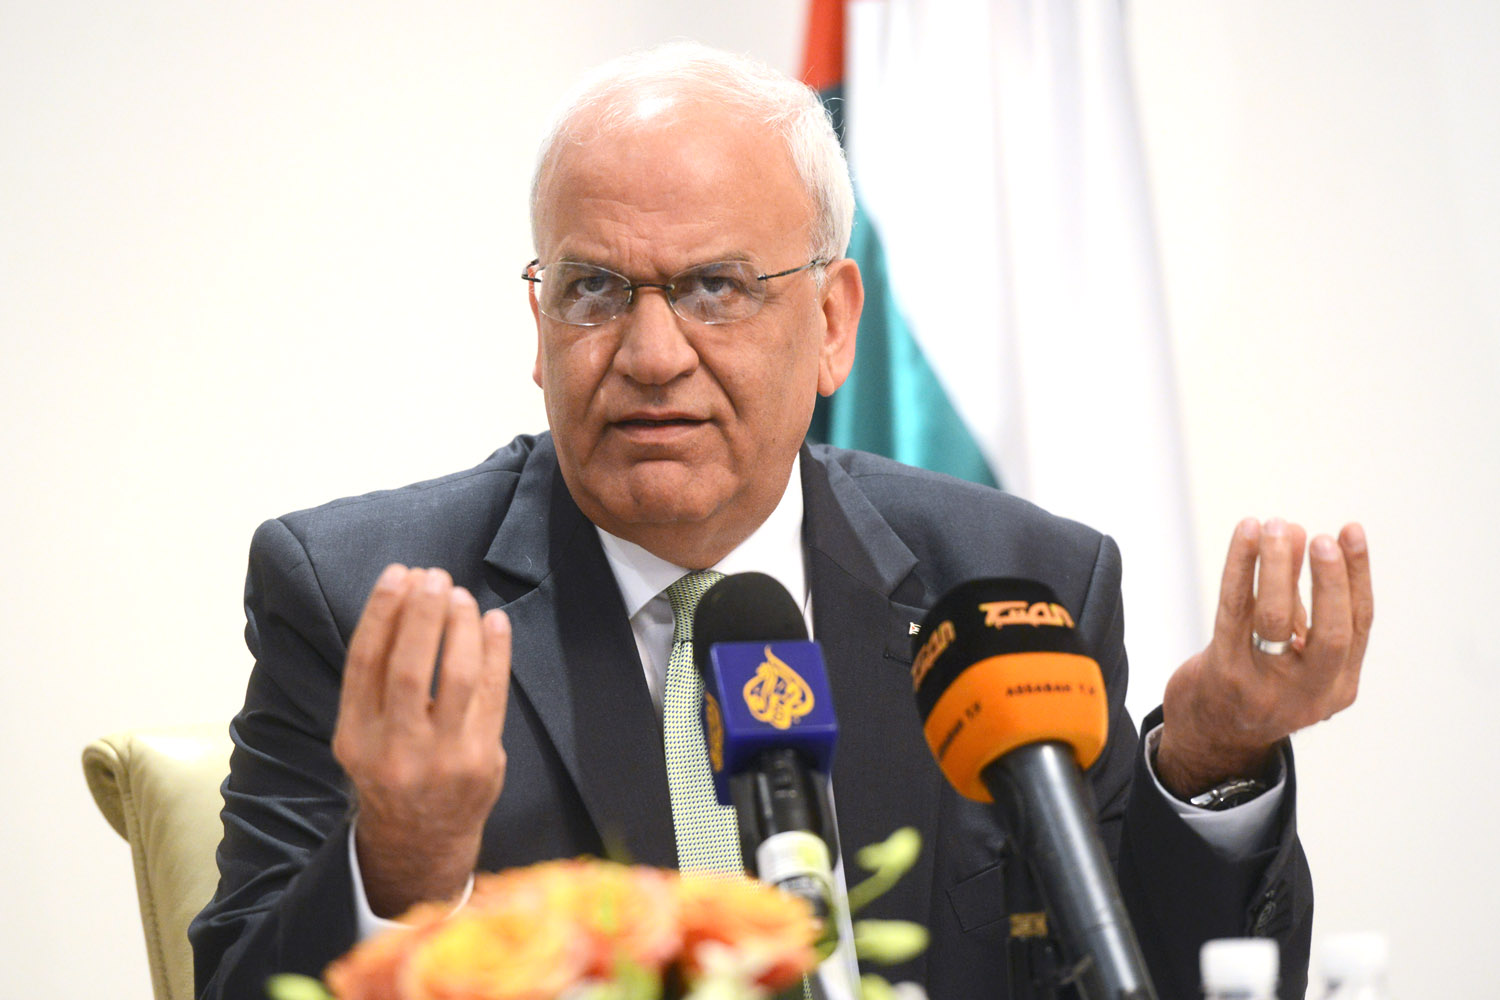 Palestinian chief negotiator Saeb Erekat